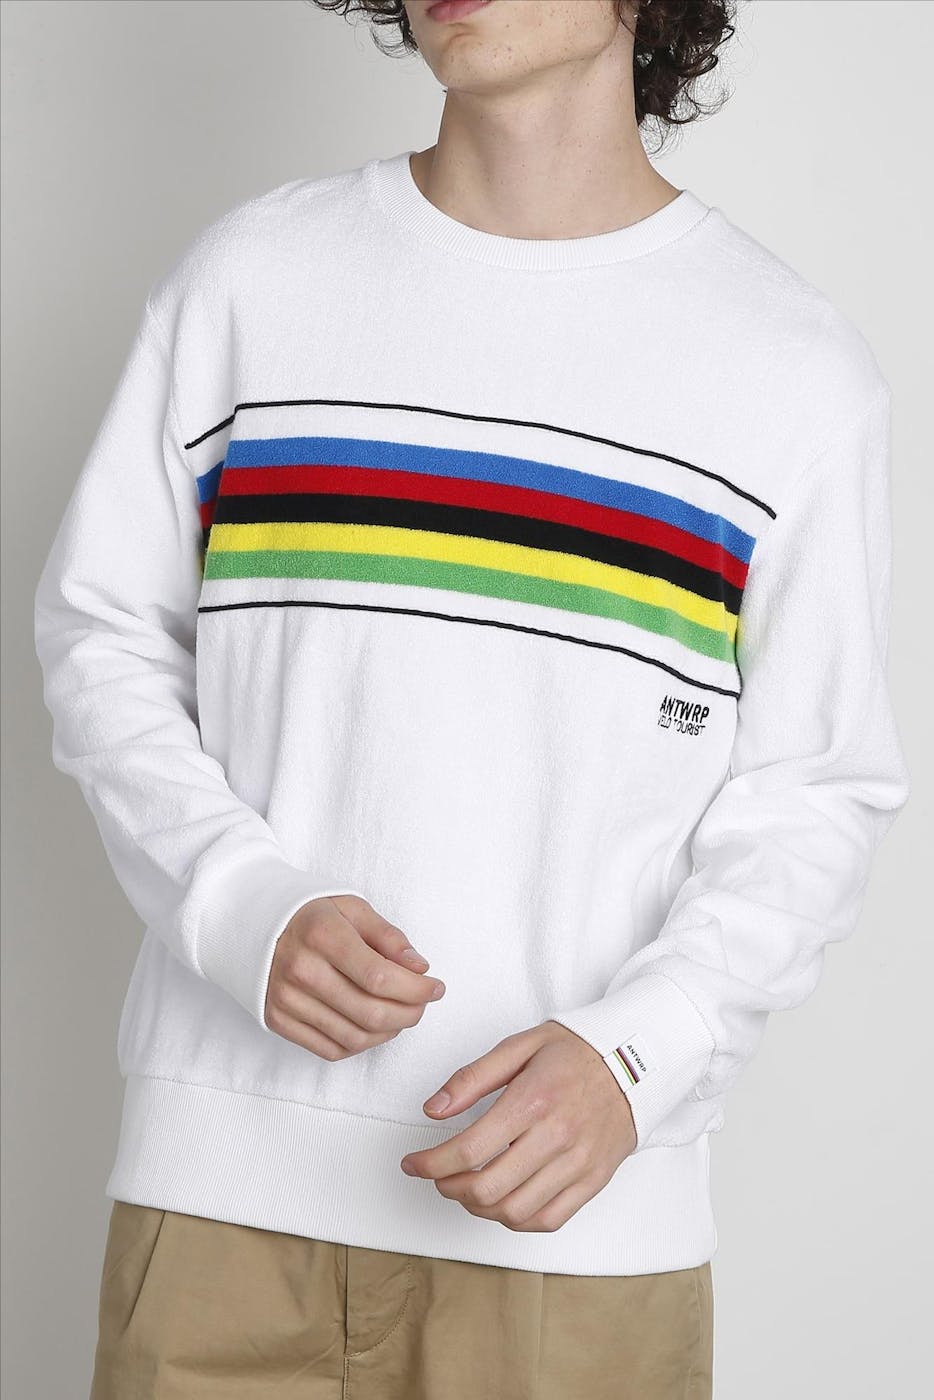 Antwrp - Witte sponzen Werelkampioen sweater